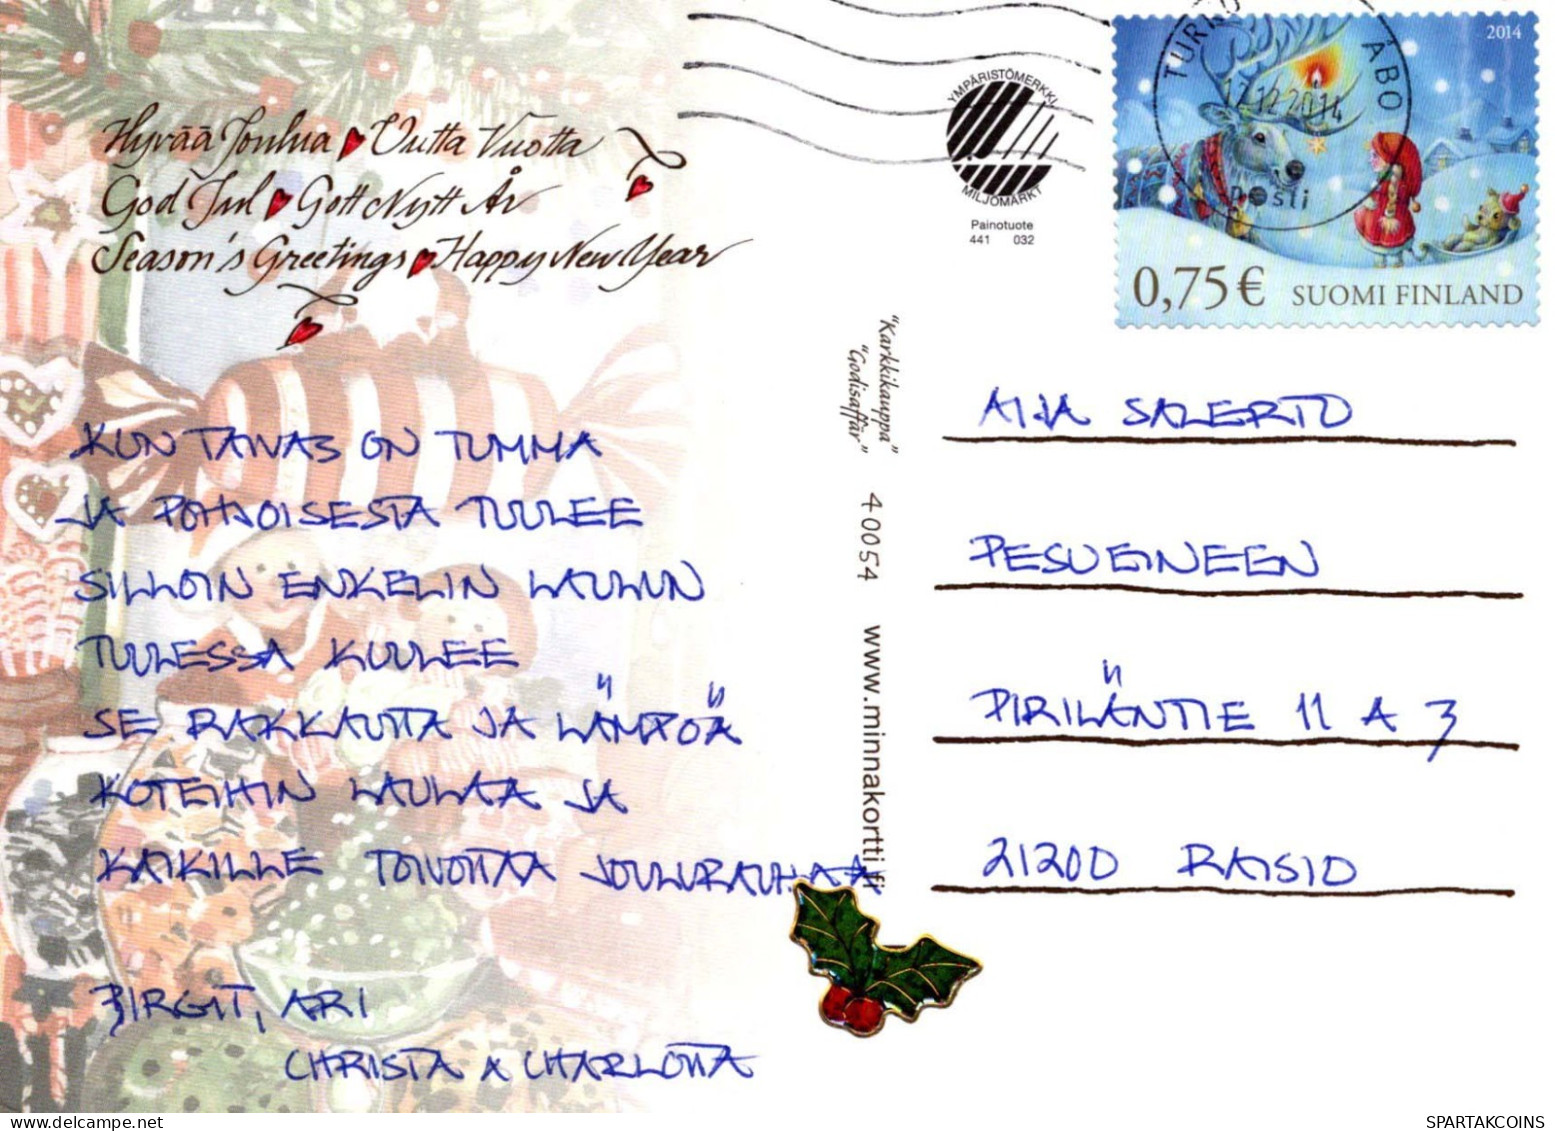 Buon Anno Natale GNOME Vintage Cartolina CPSM #PBM140.IT - New Year